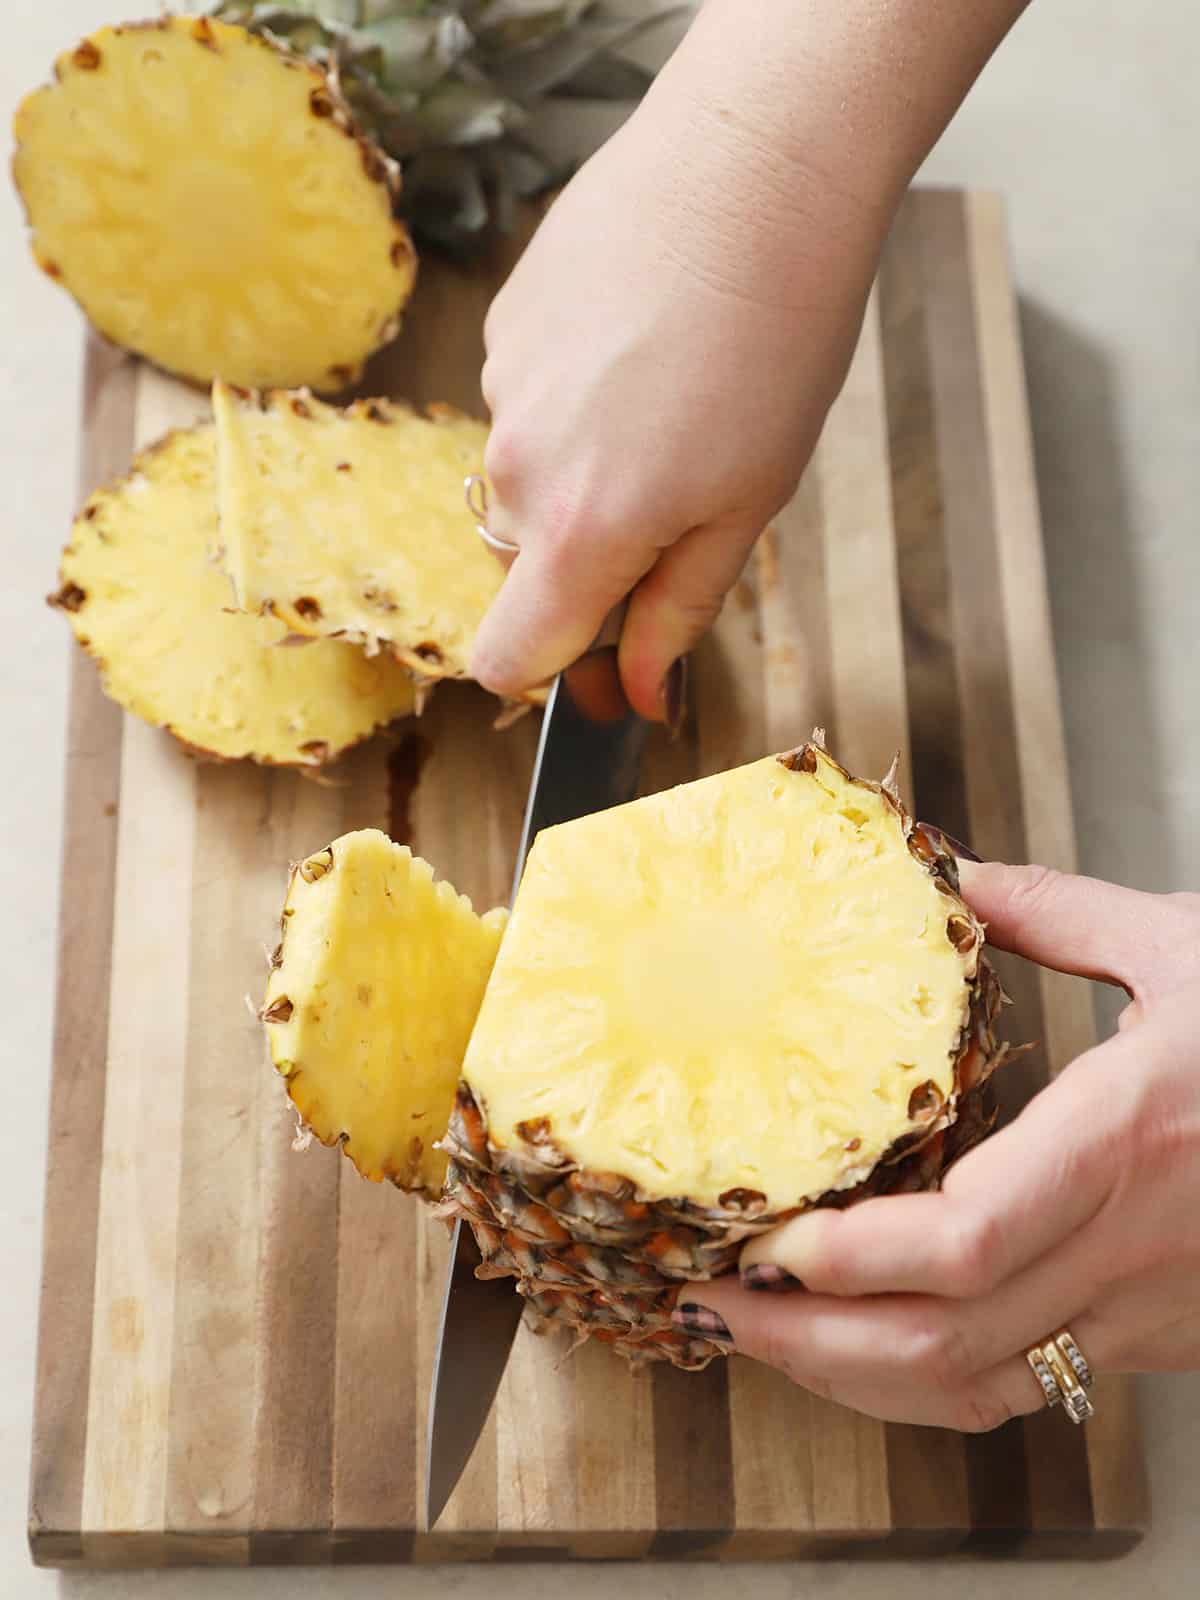 A hand cutting up a fresh pineapple. 